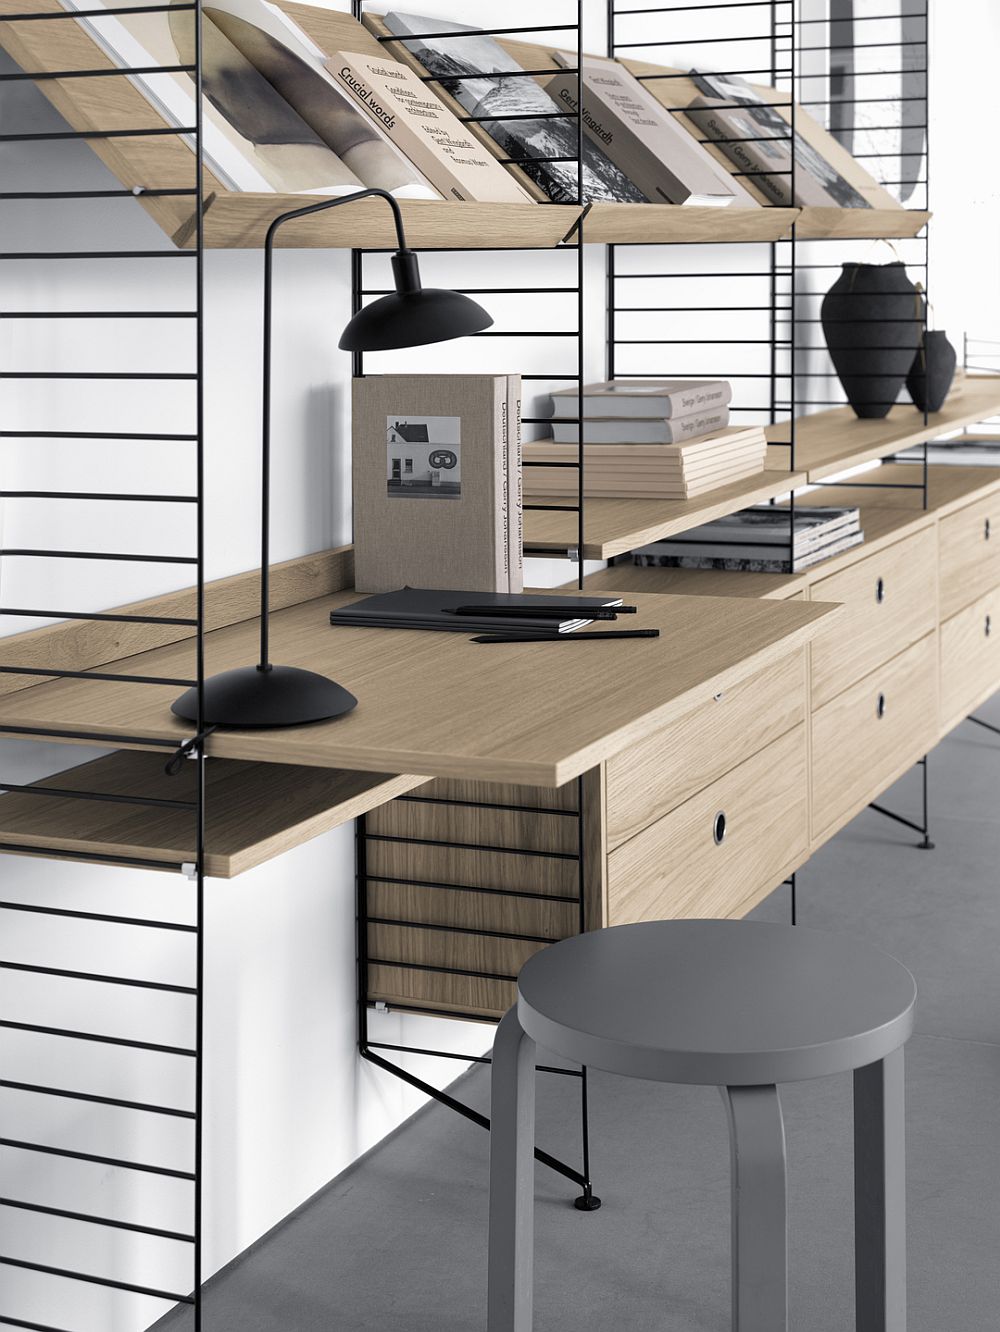 Perfect ergonomics meet Scandinavian simplicity with the String workspace